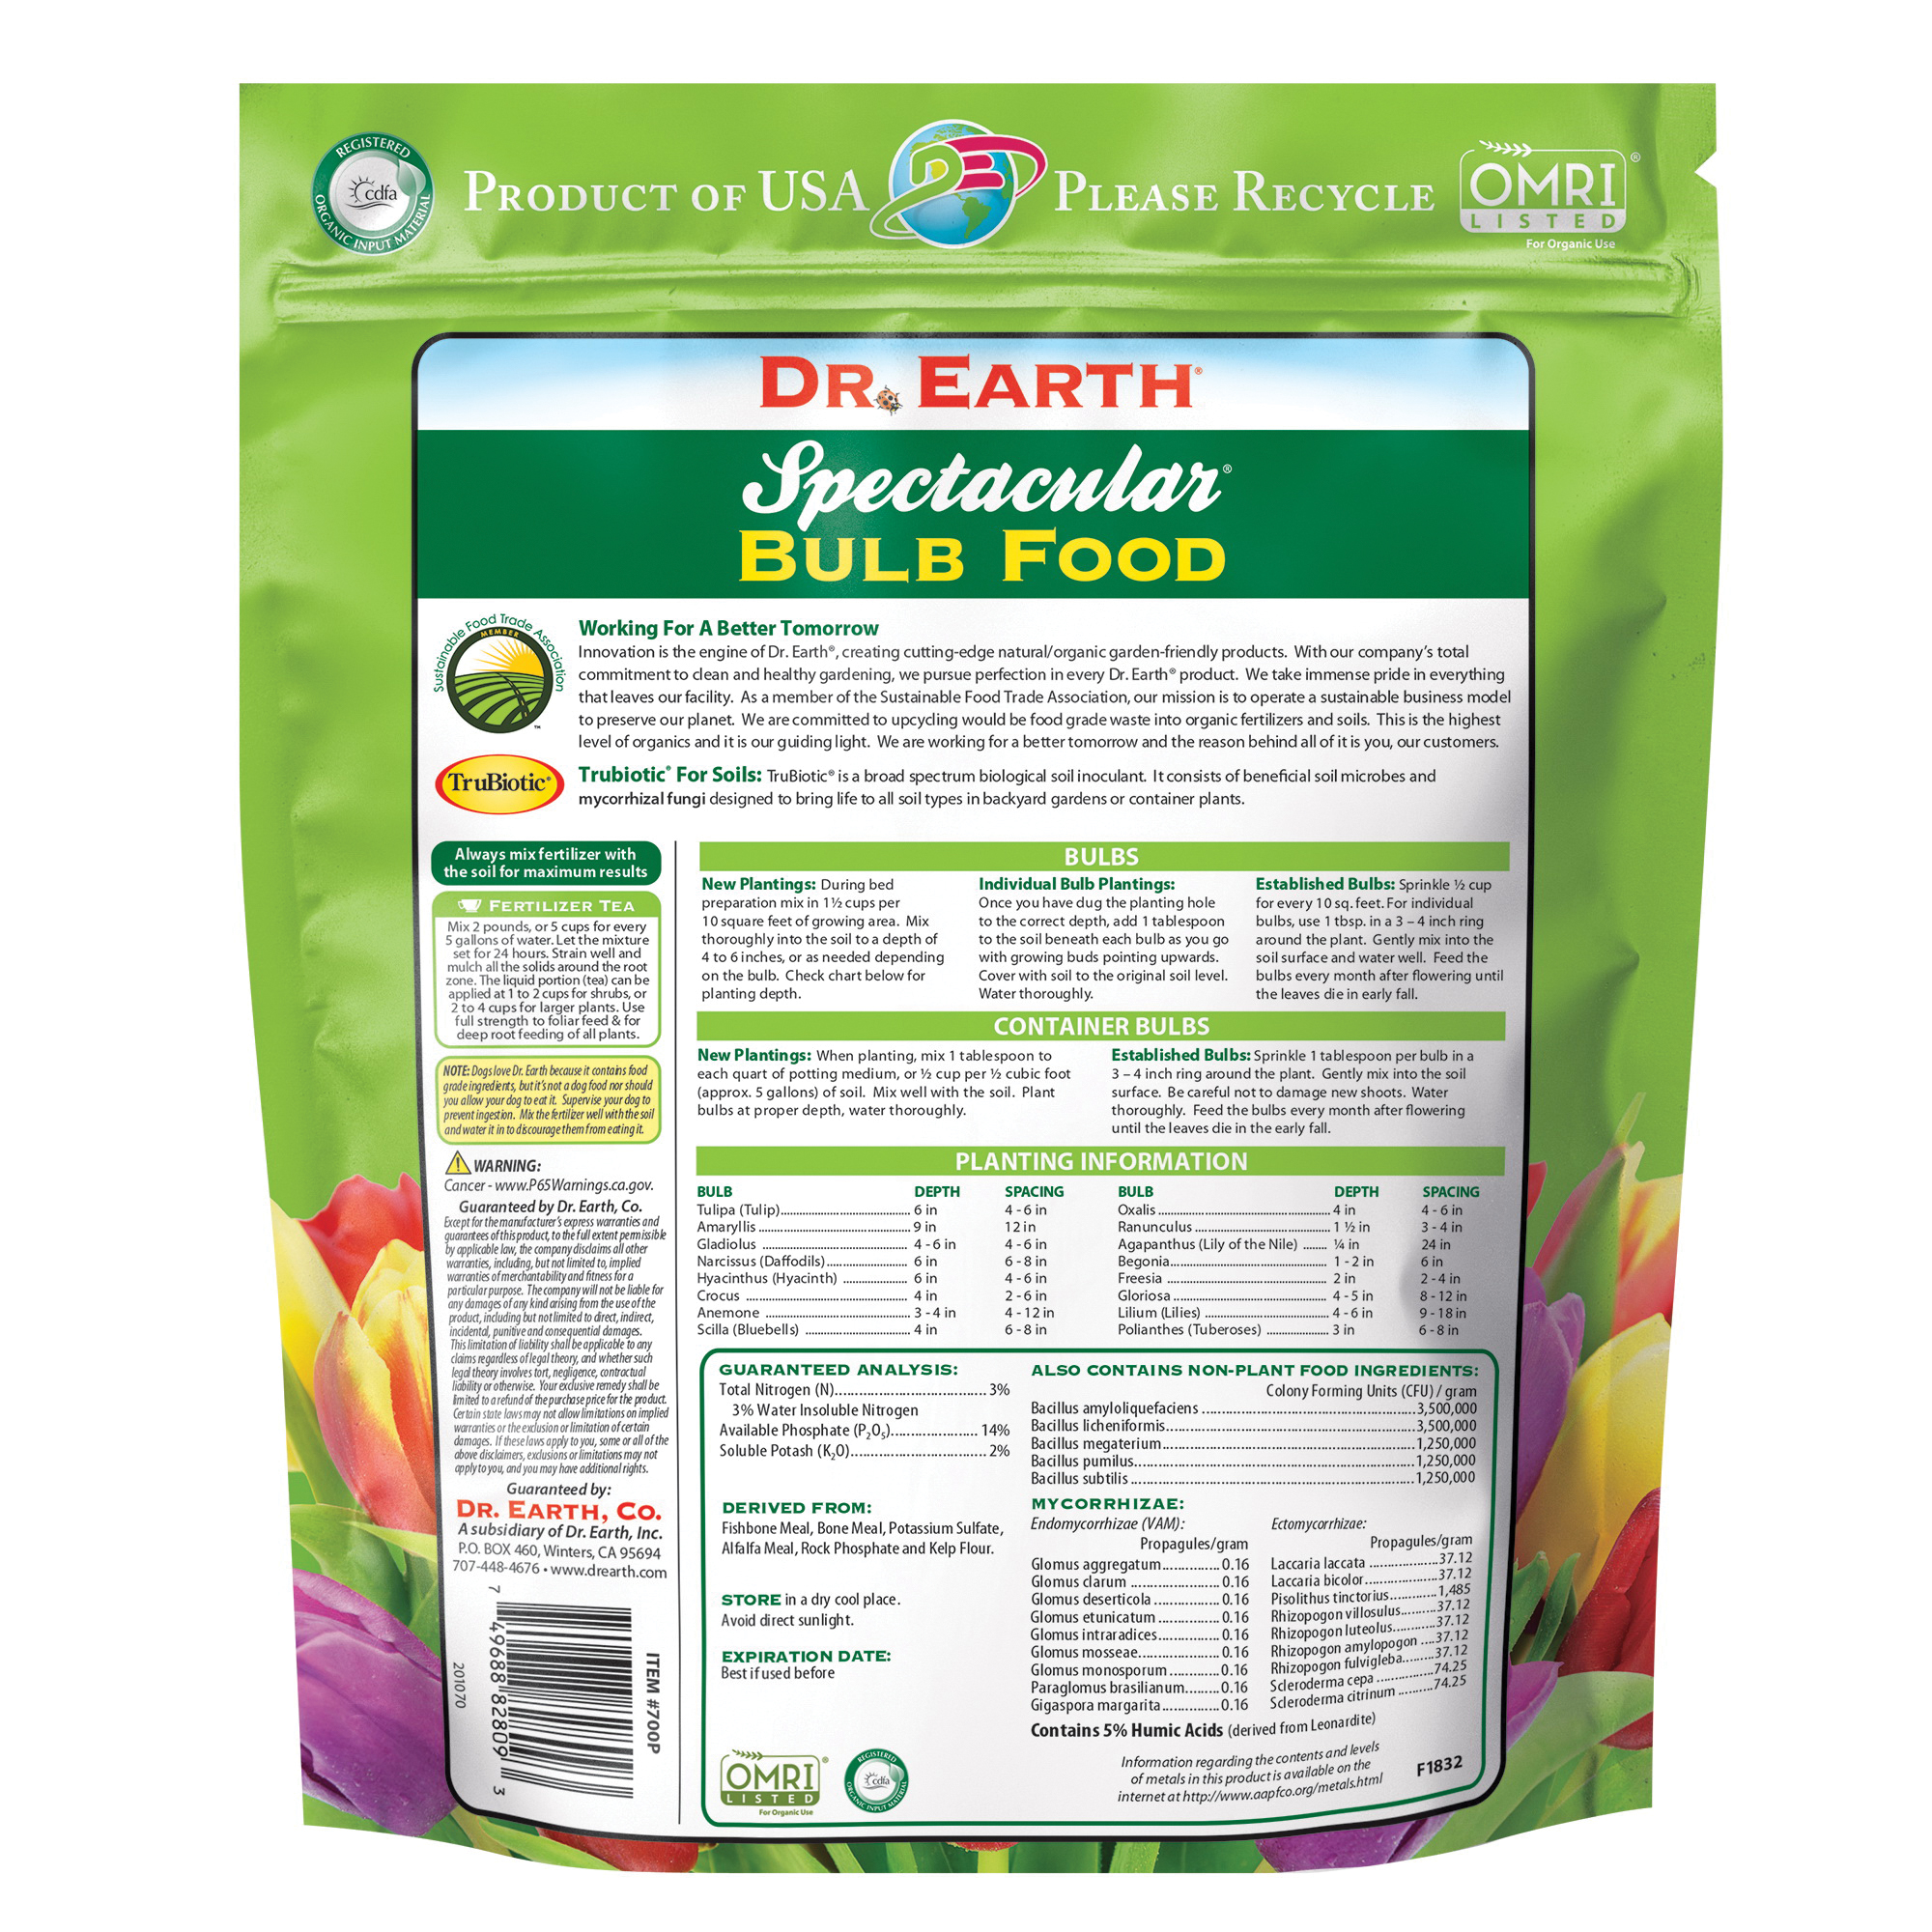 Dr. Earth 700P Plant Fertilizer, 4 lb Bag, Granular, 3-14-2 N-P-K Ratio - 2